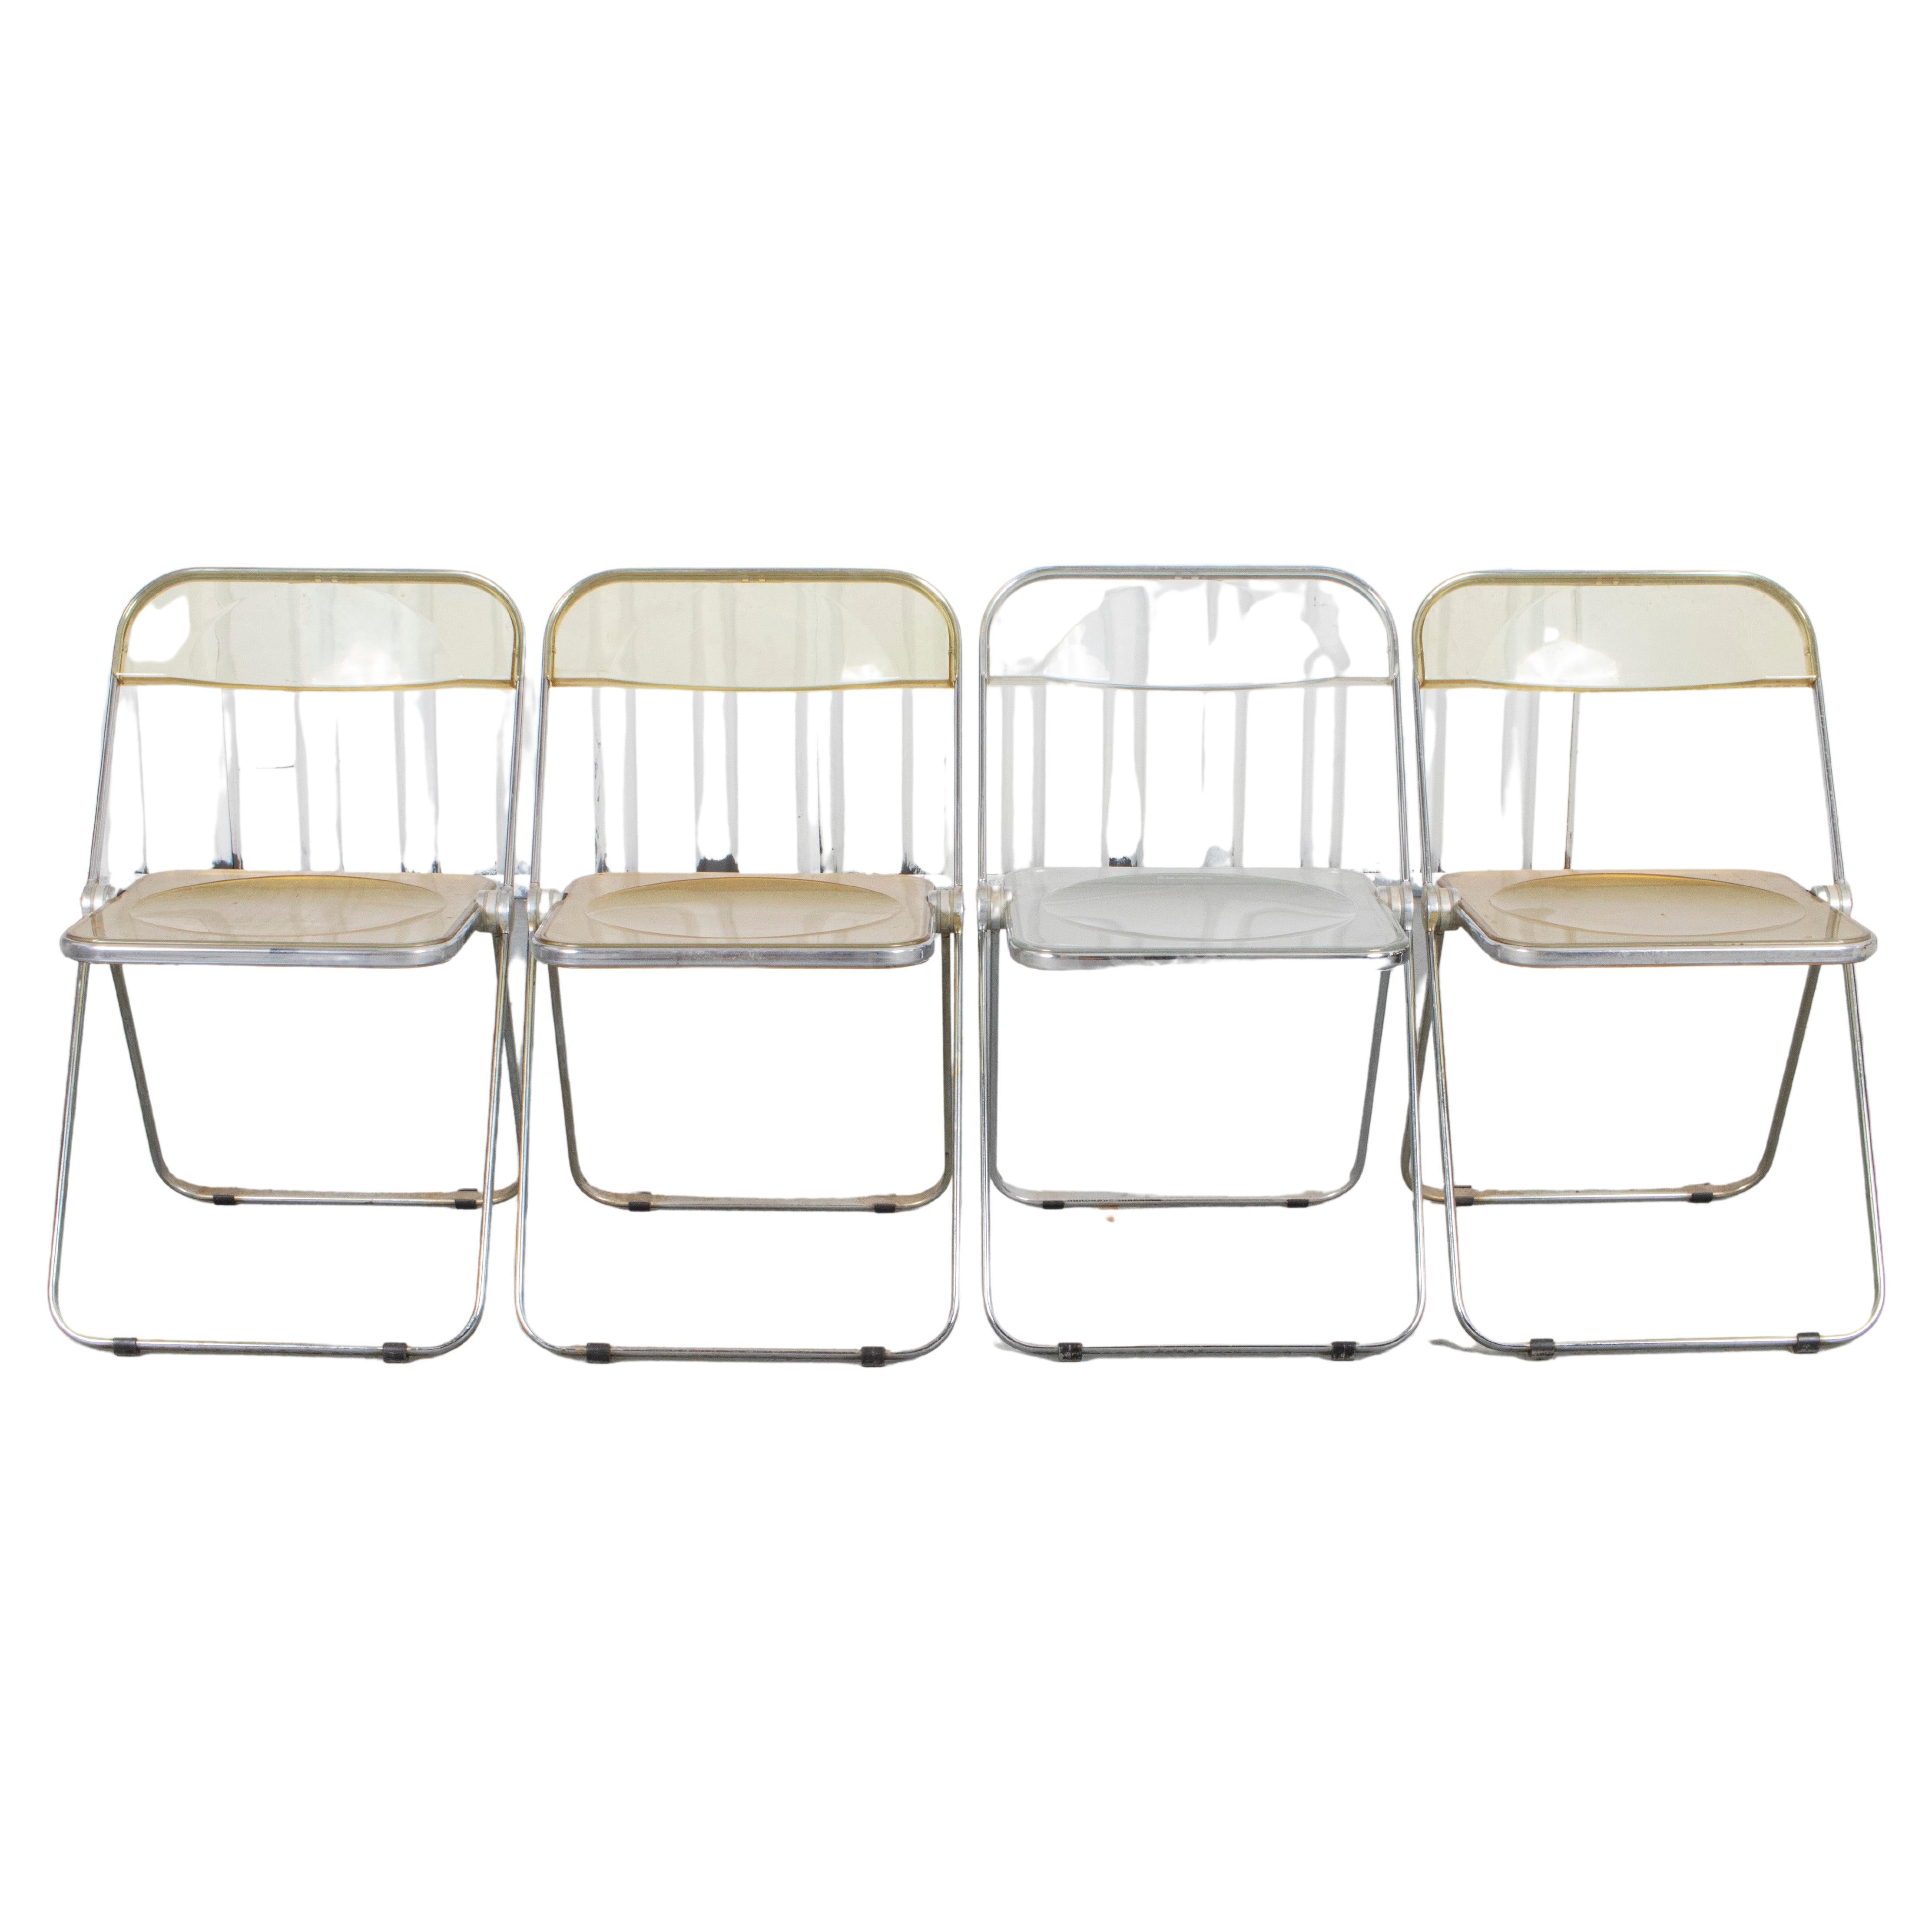 Piretti Castelli Lucite 'Plia ' Folding Chairs, 4 For Sale